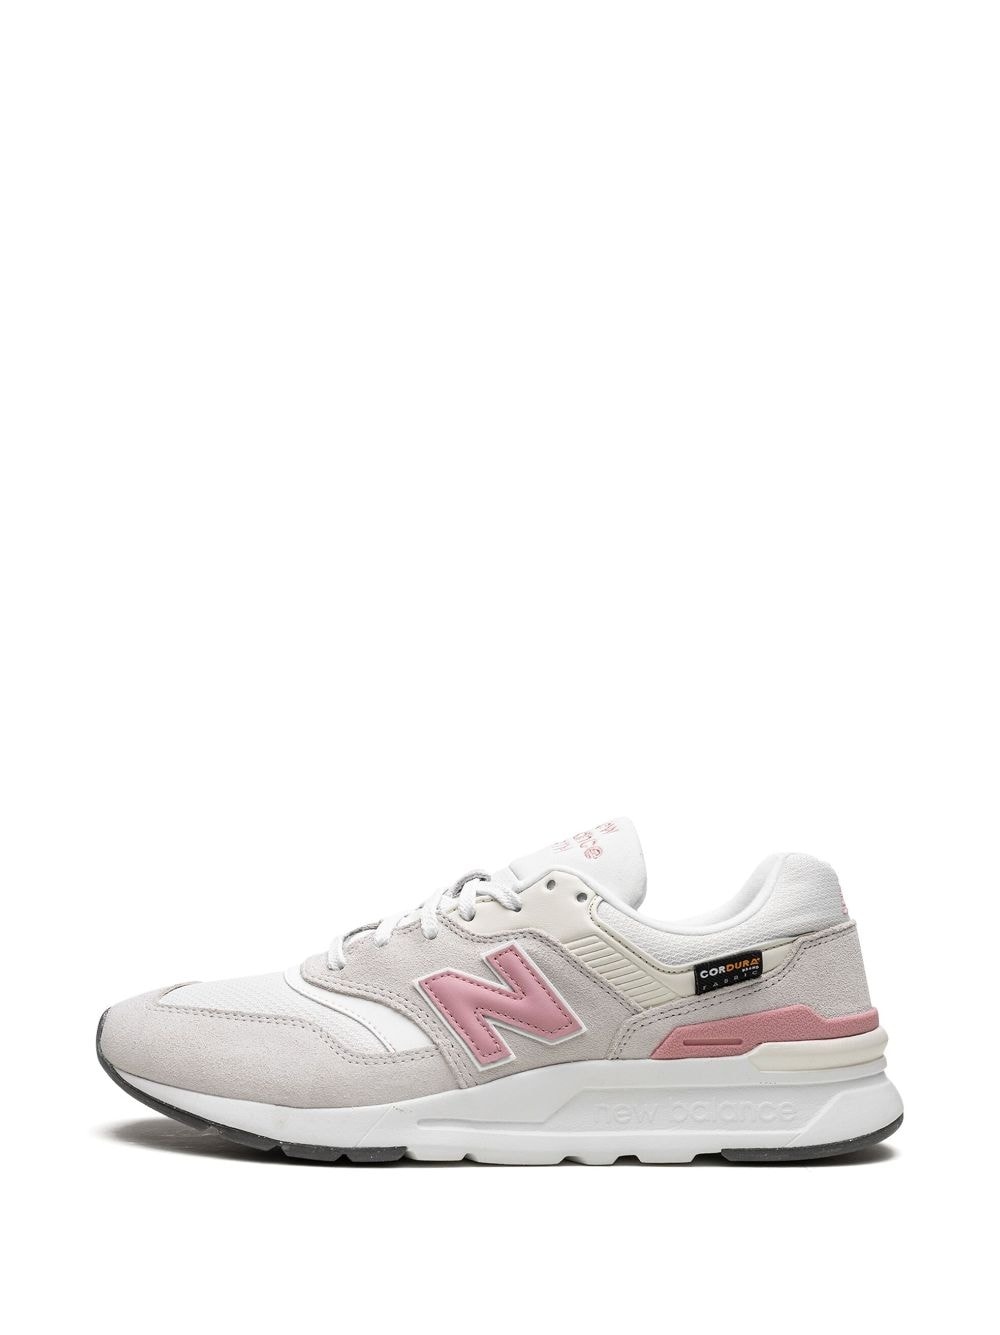 997H "Grey/Pink" sneakers - 5